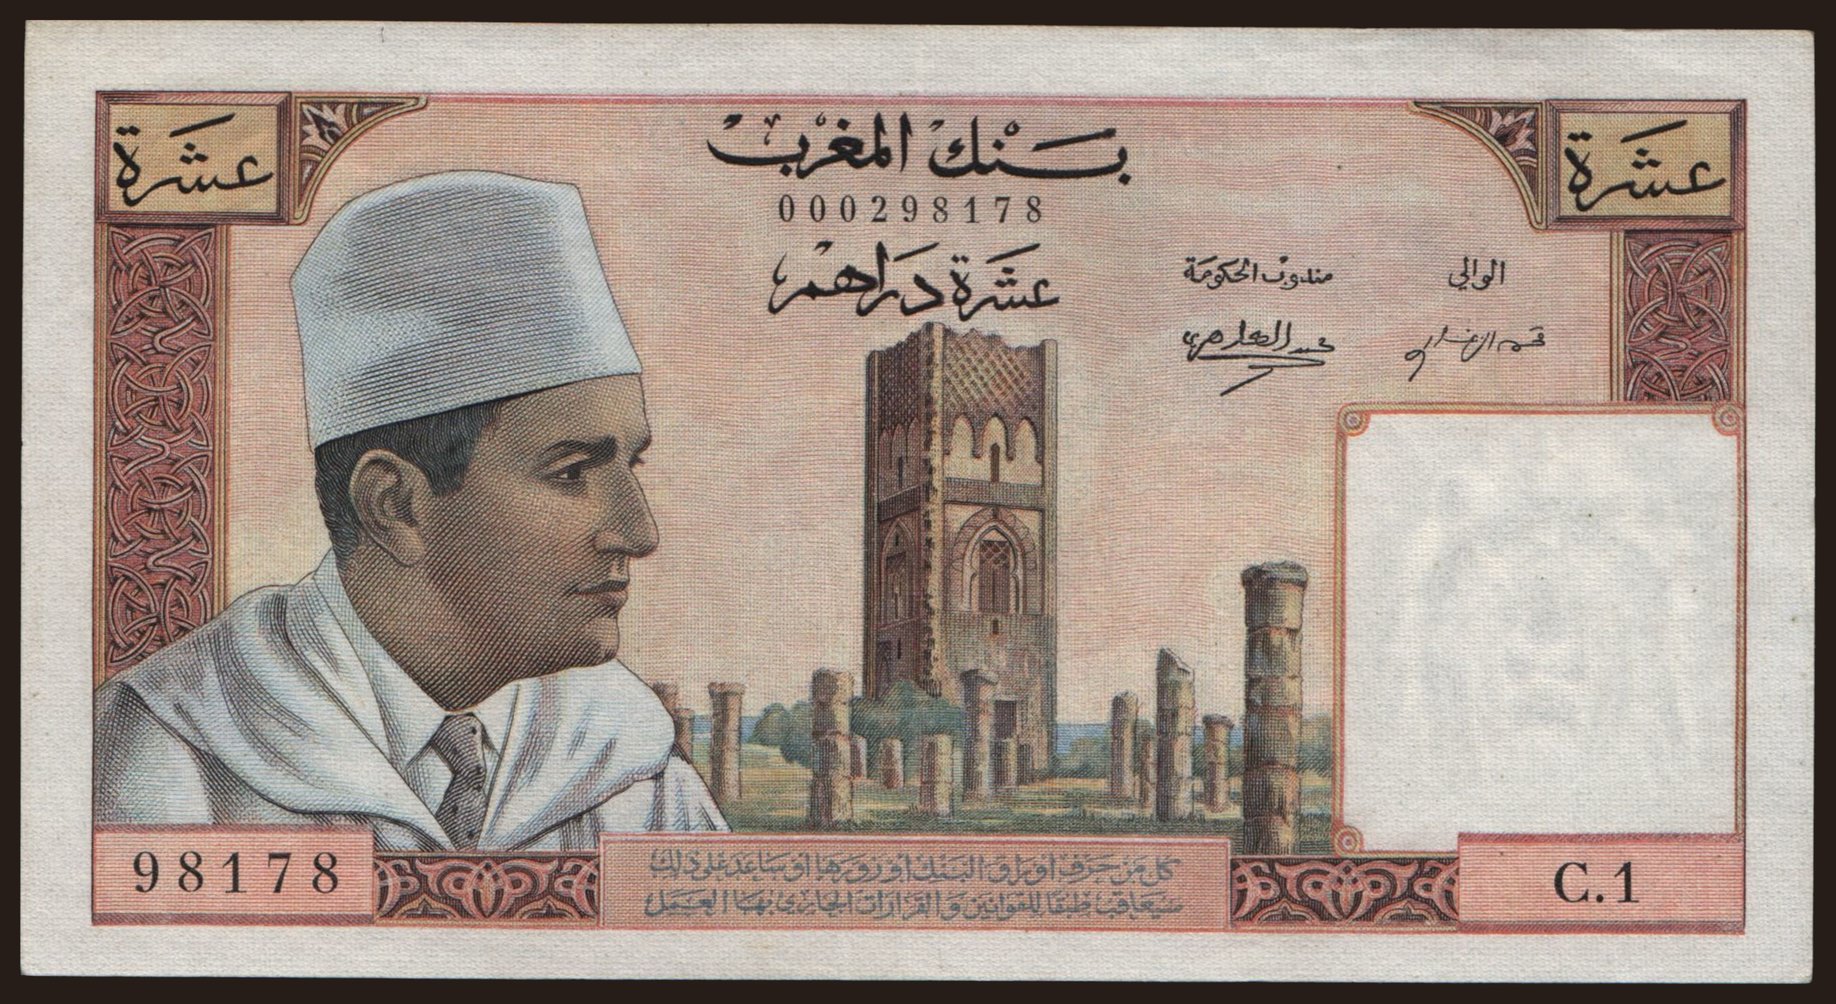 10 dirhams, 1960